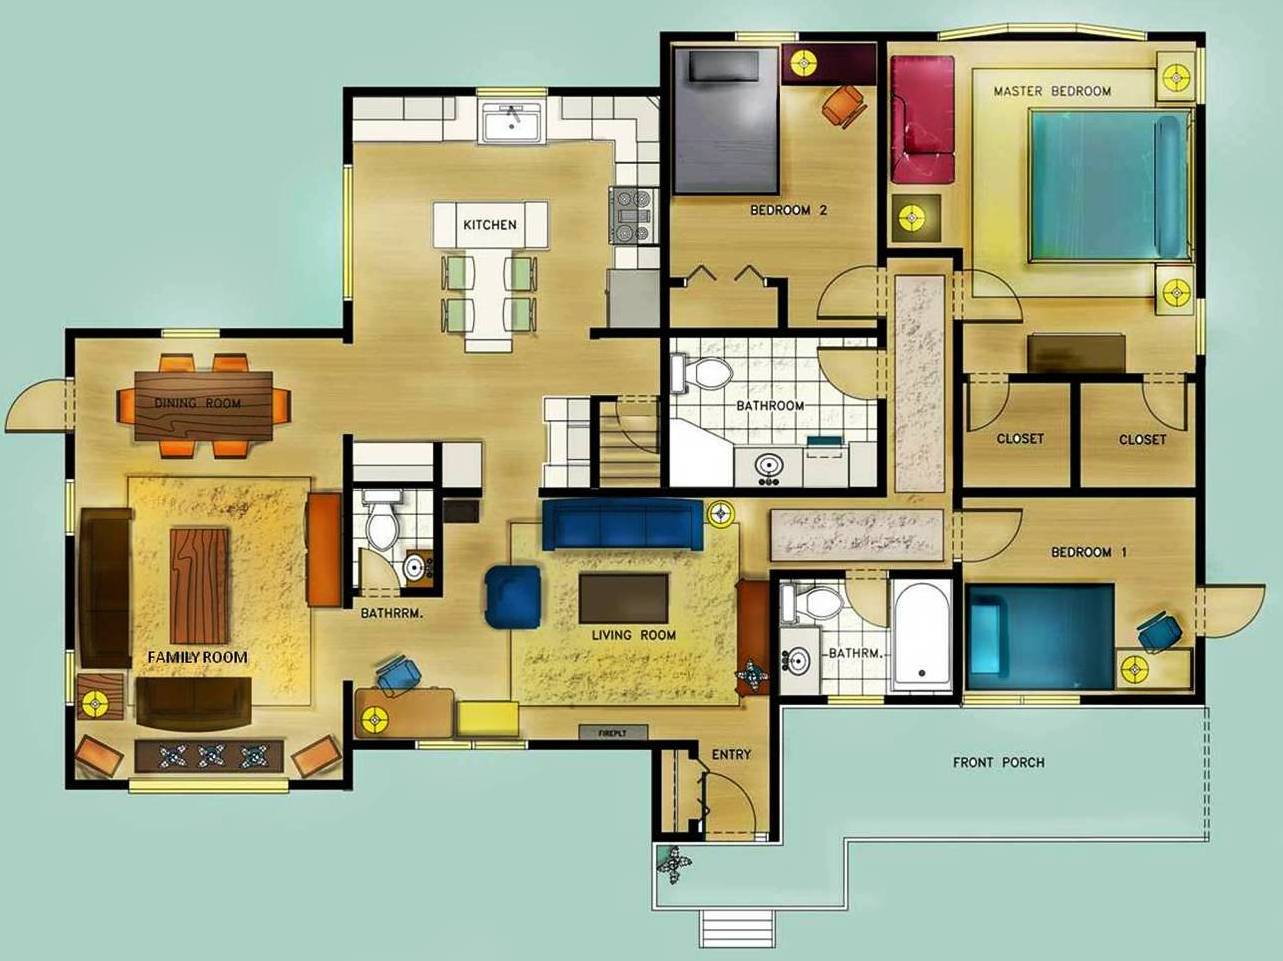 Floor Plan Furniture At Home And Interior Design Ideas